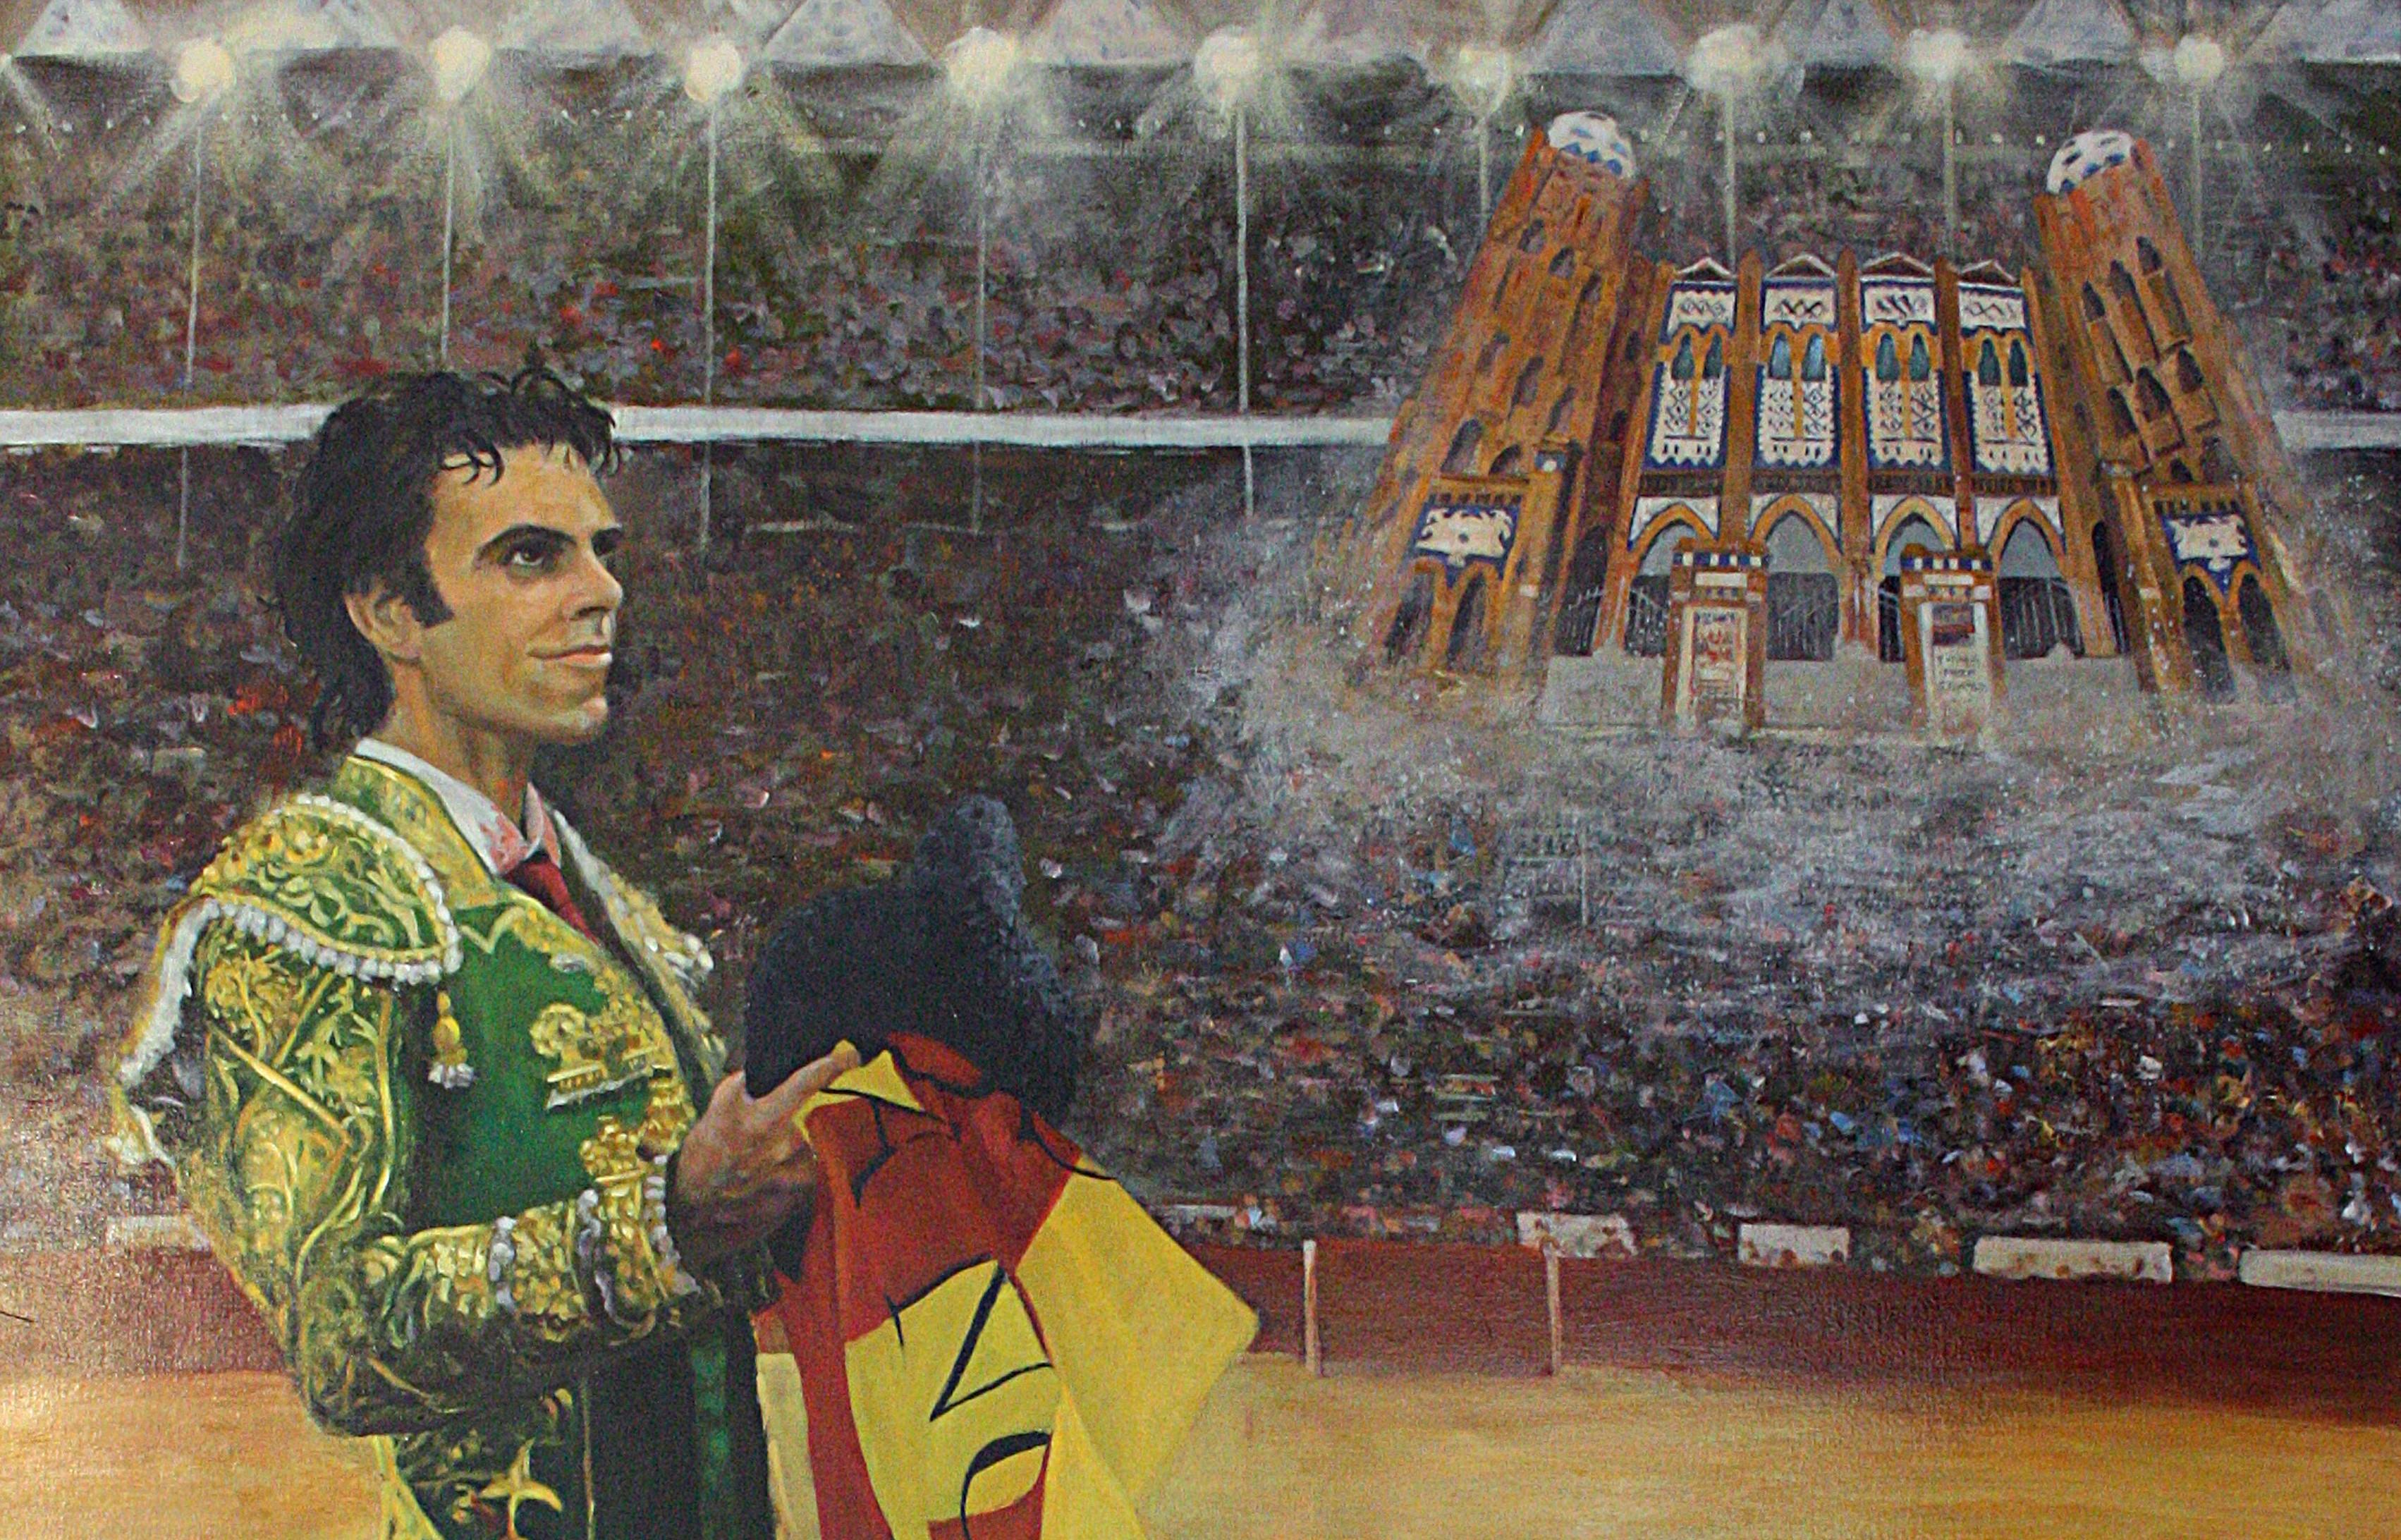 Brindis a la monumental - Painting by José Luis Pagador Ponce